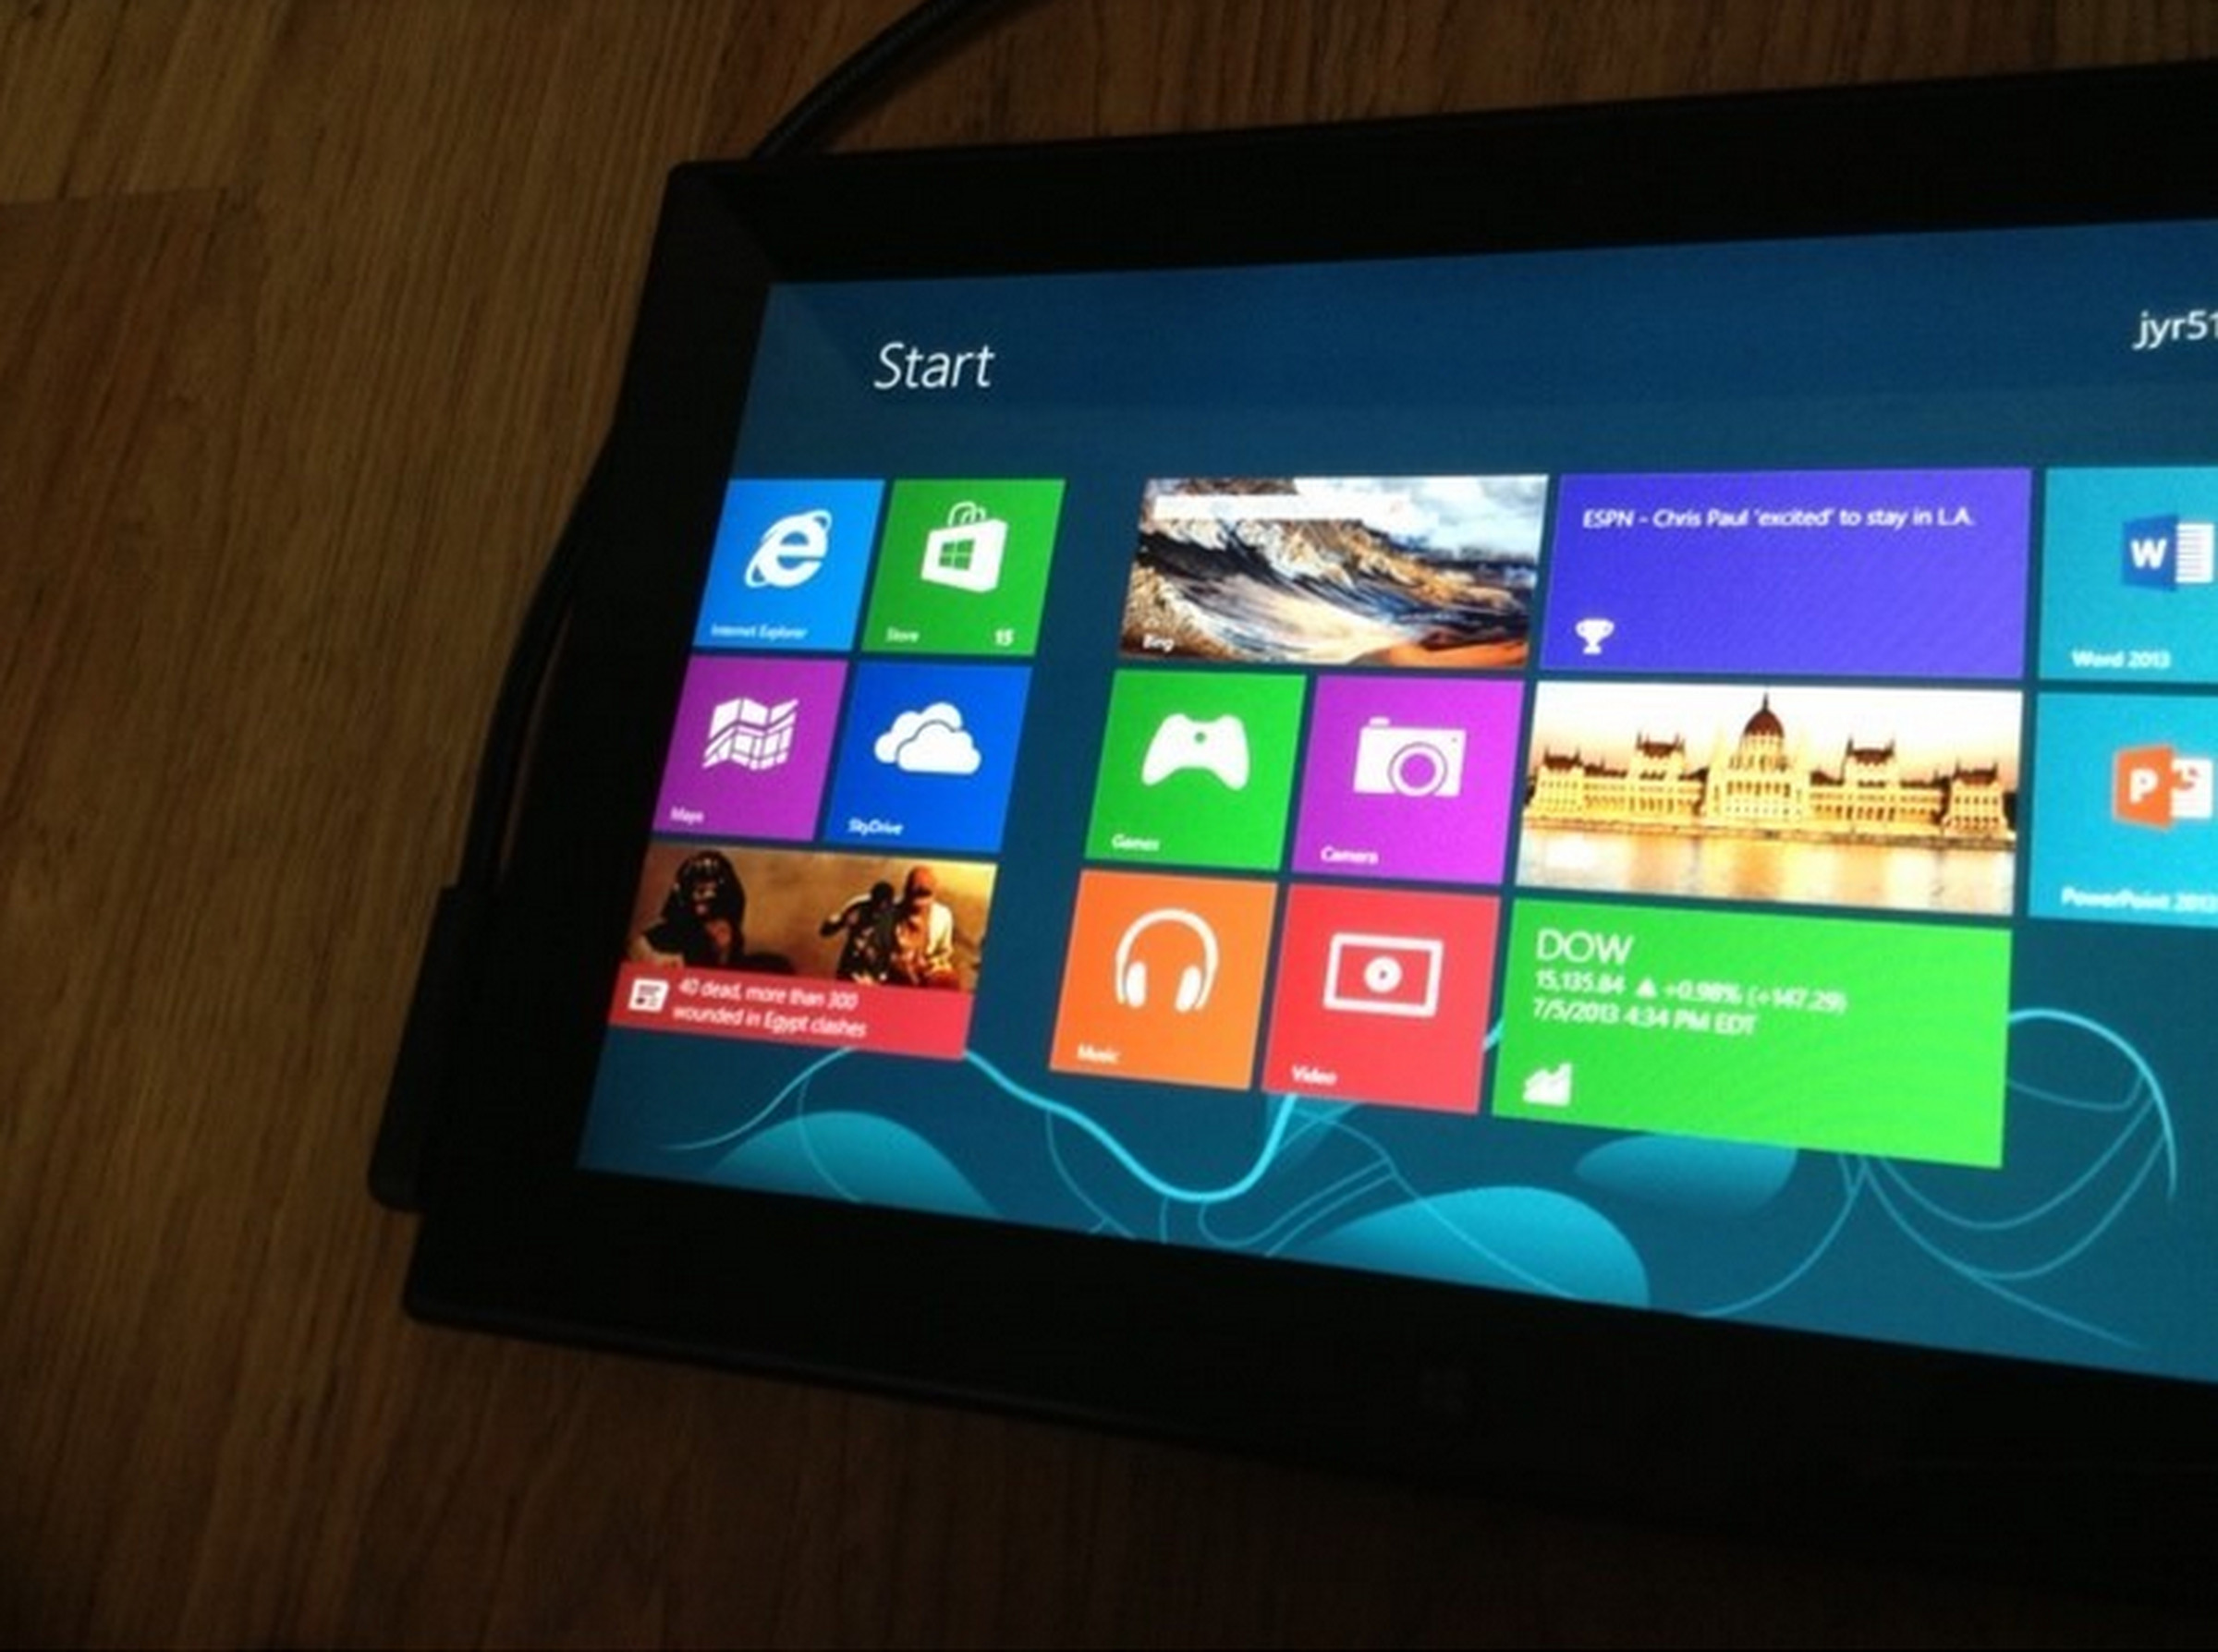 Nokia Windows RT tablet photos